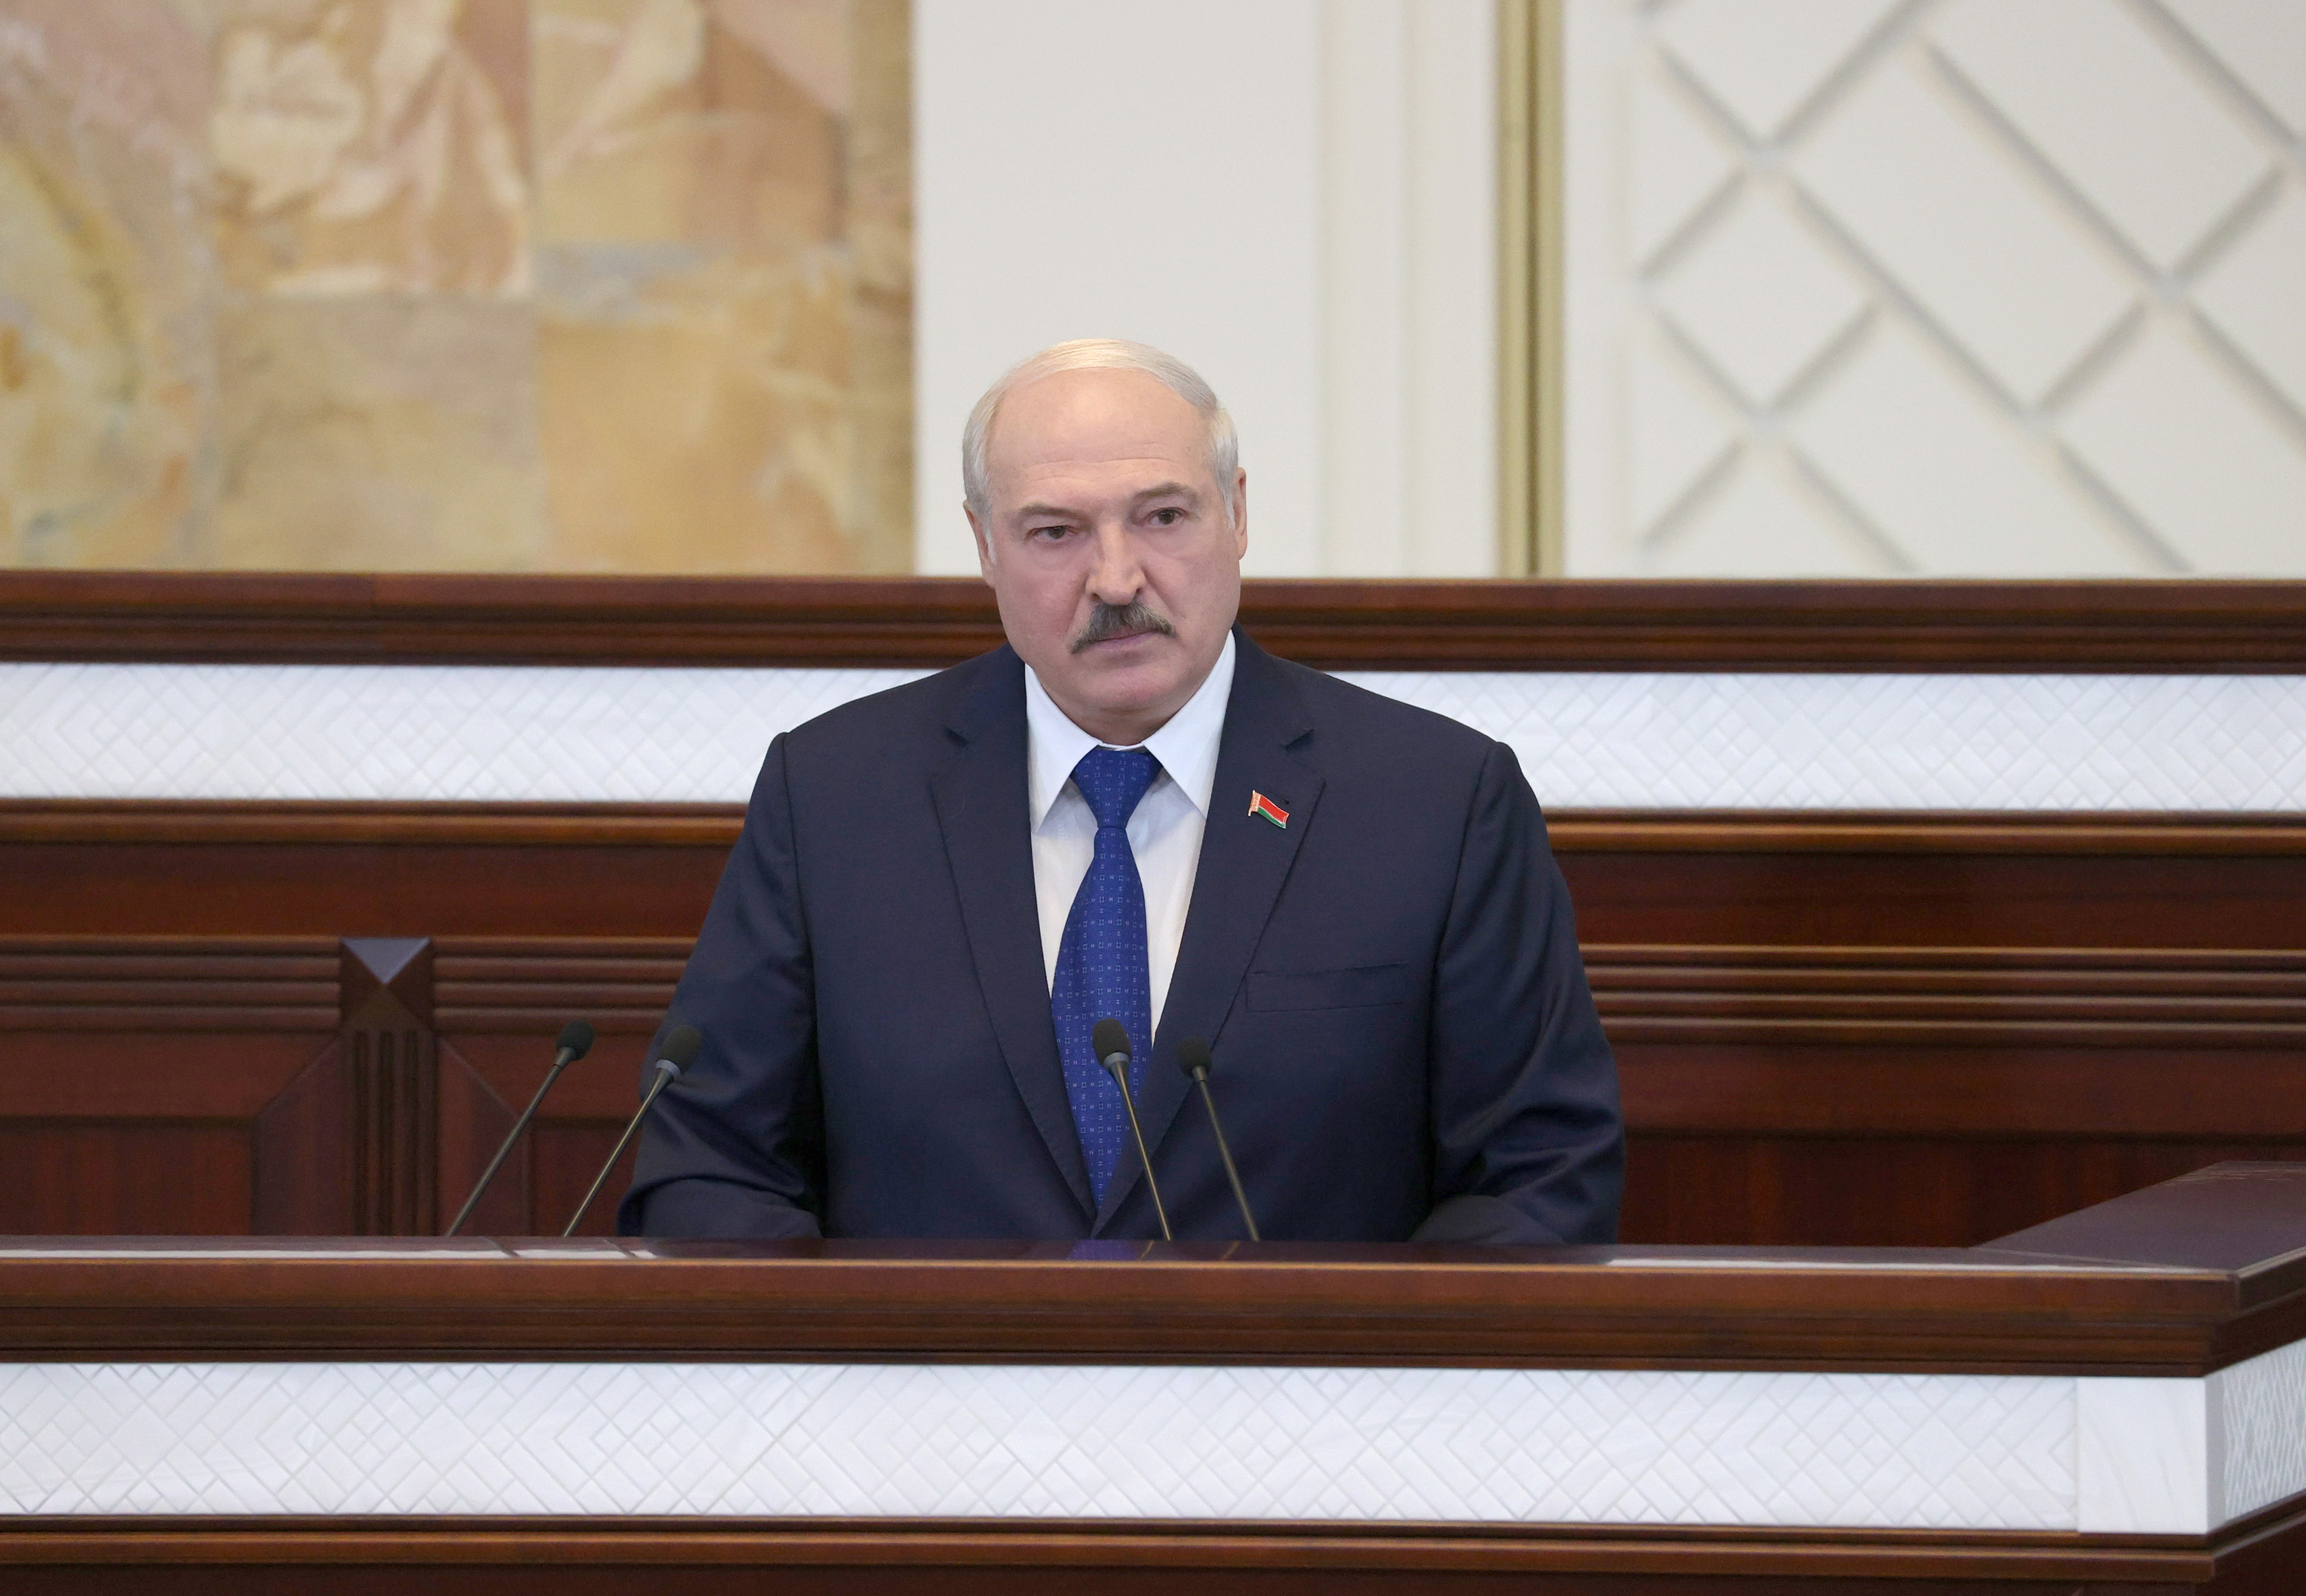 Belarusian President Alexander Lukashenko delivers a speech during a meeting in Minsk